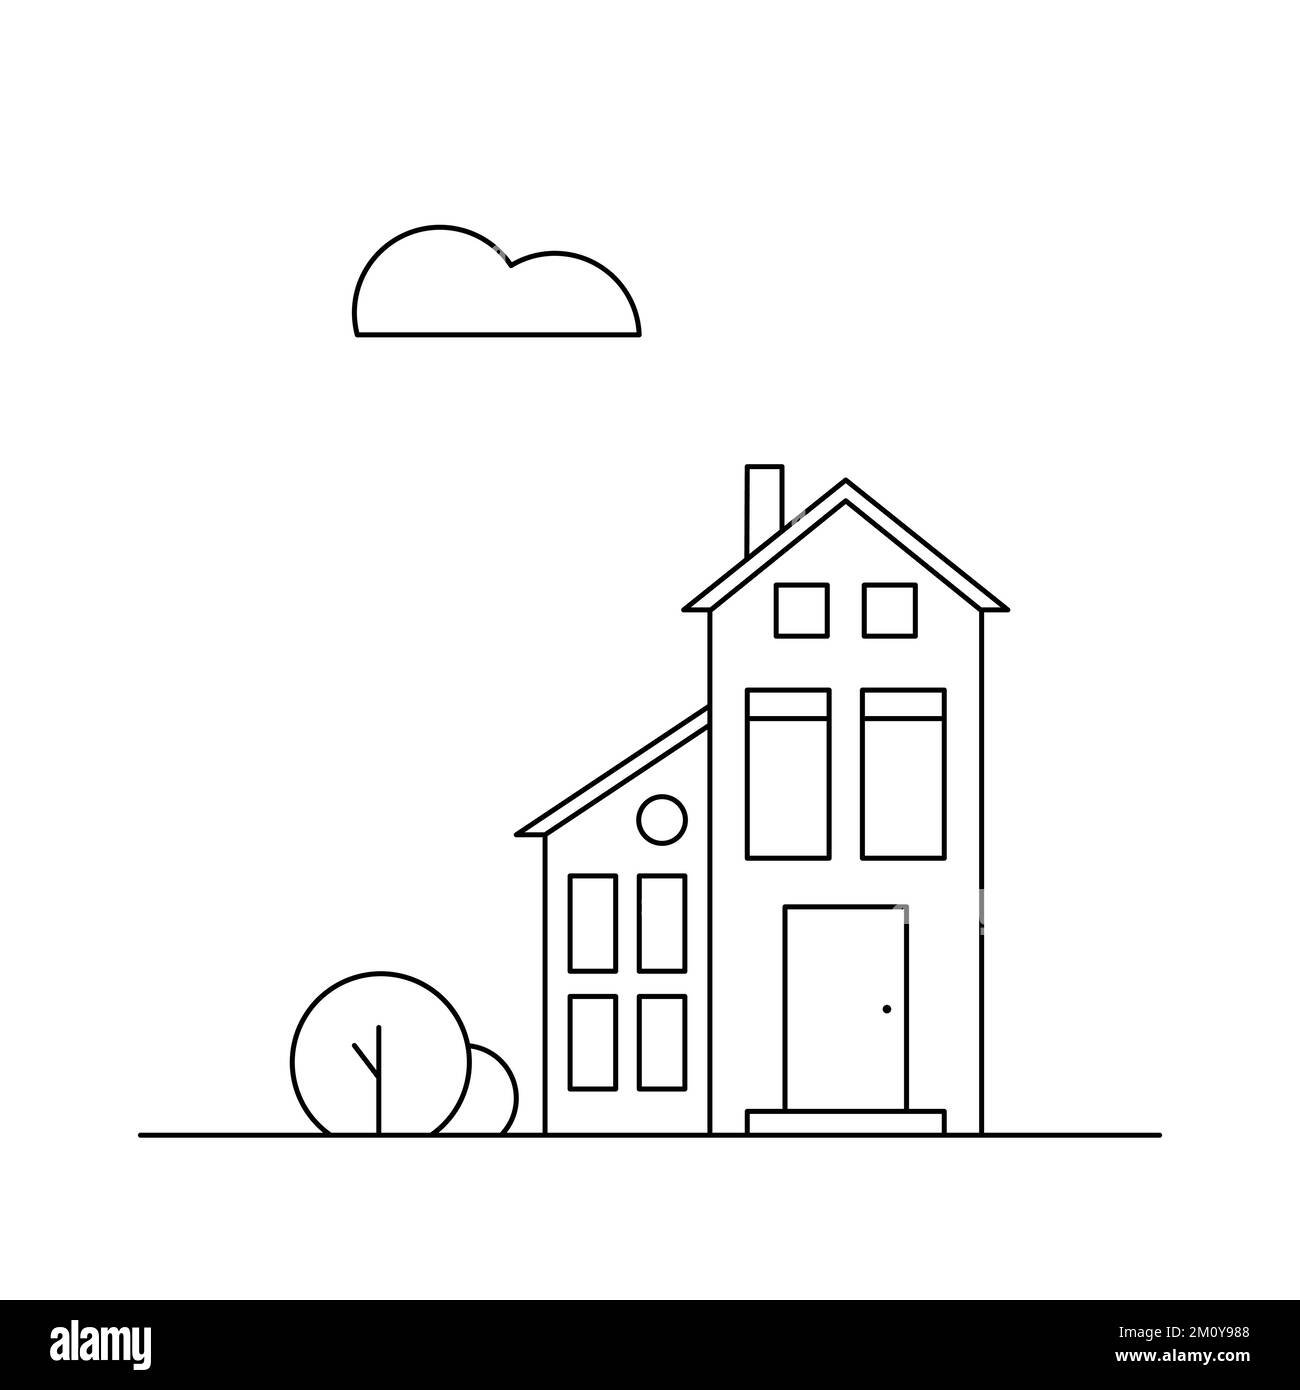 One house and a bush. Neighborhood district. Line art vector illustration. Stock Vector